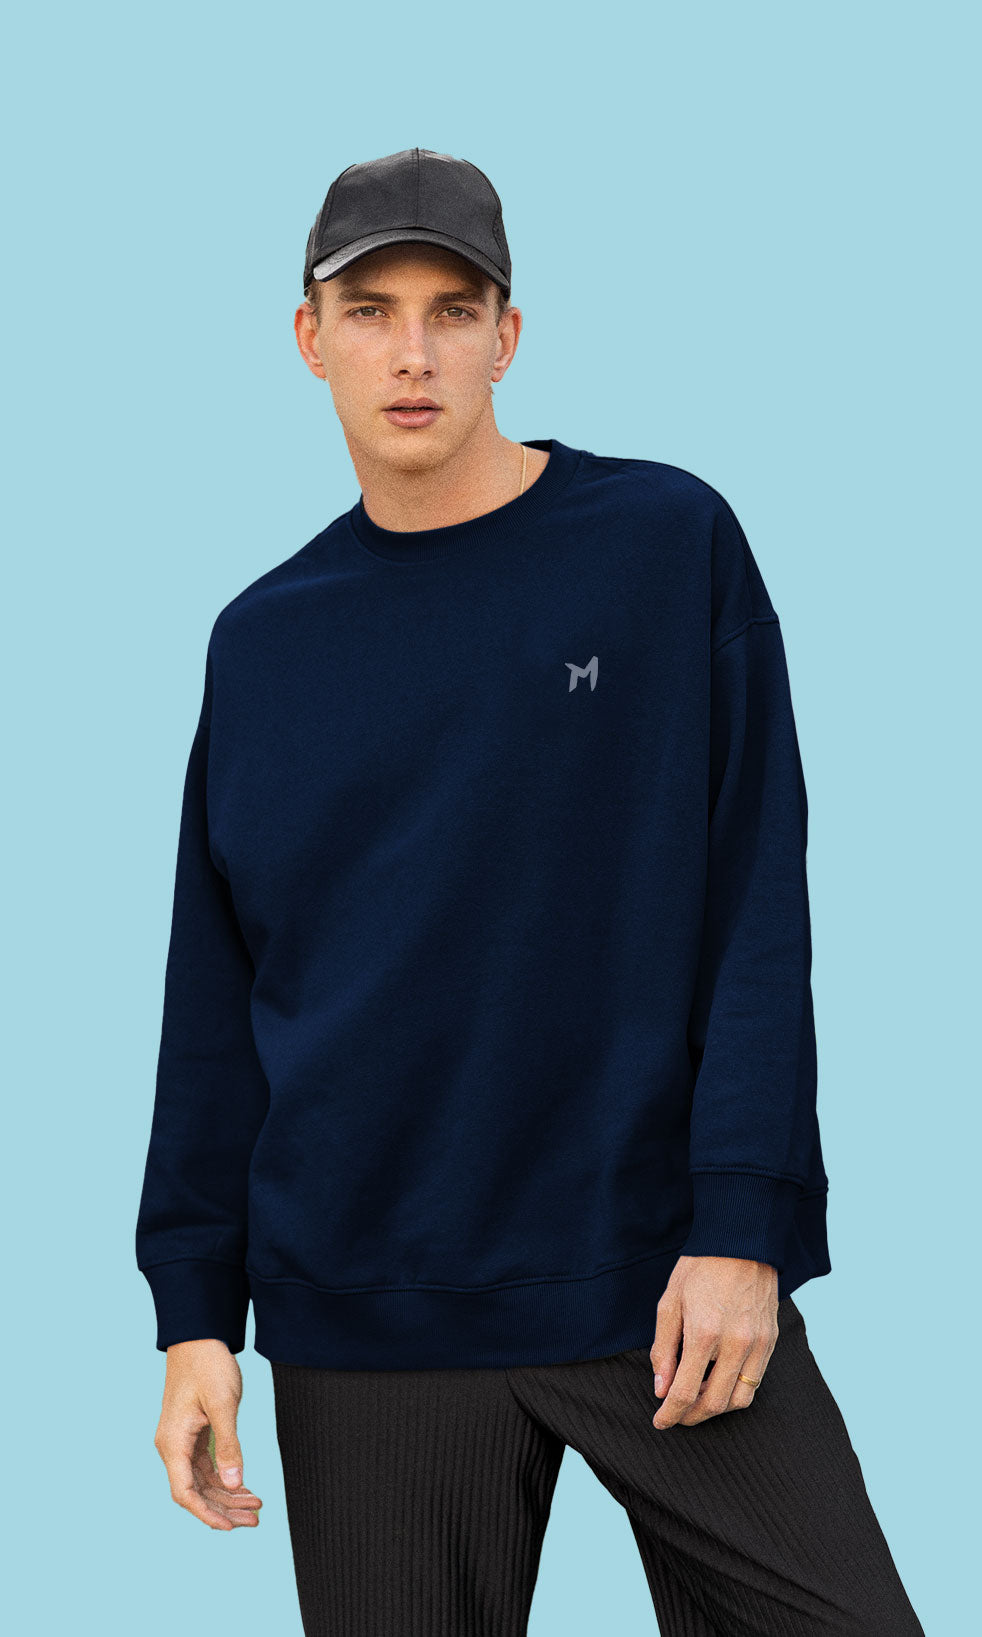 Mebadass Cotton Men's Oversized Sweatshirt - Navy Blue